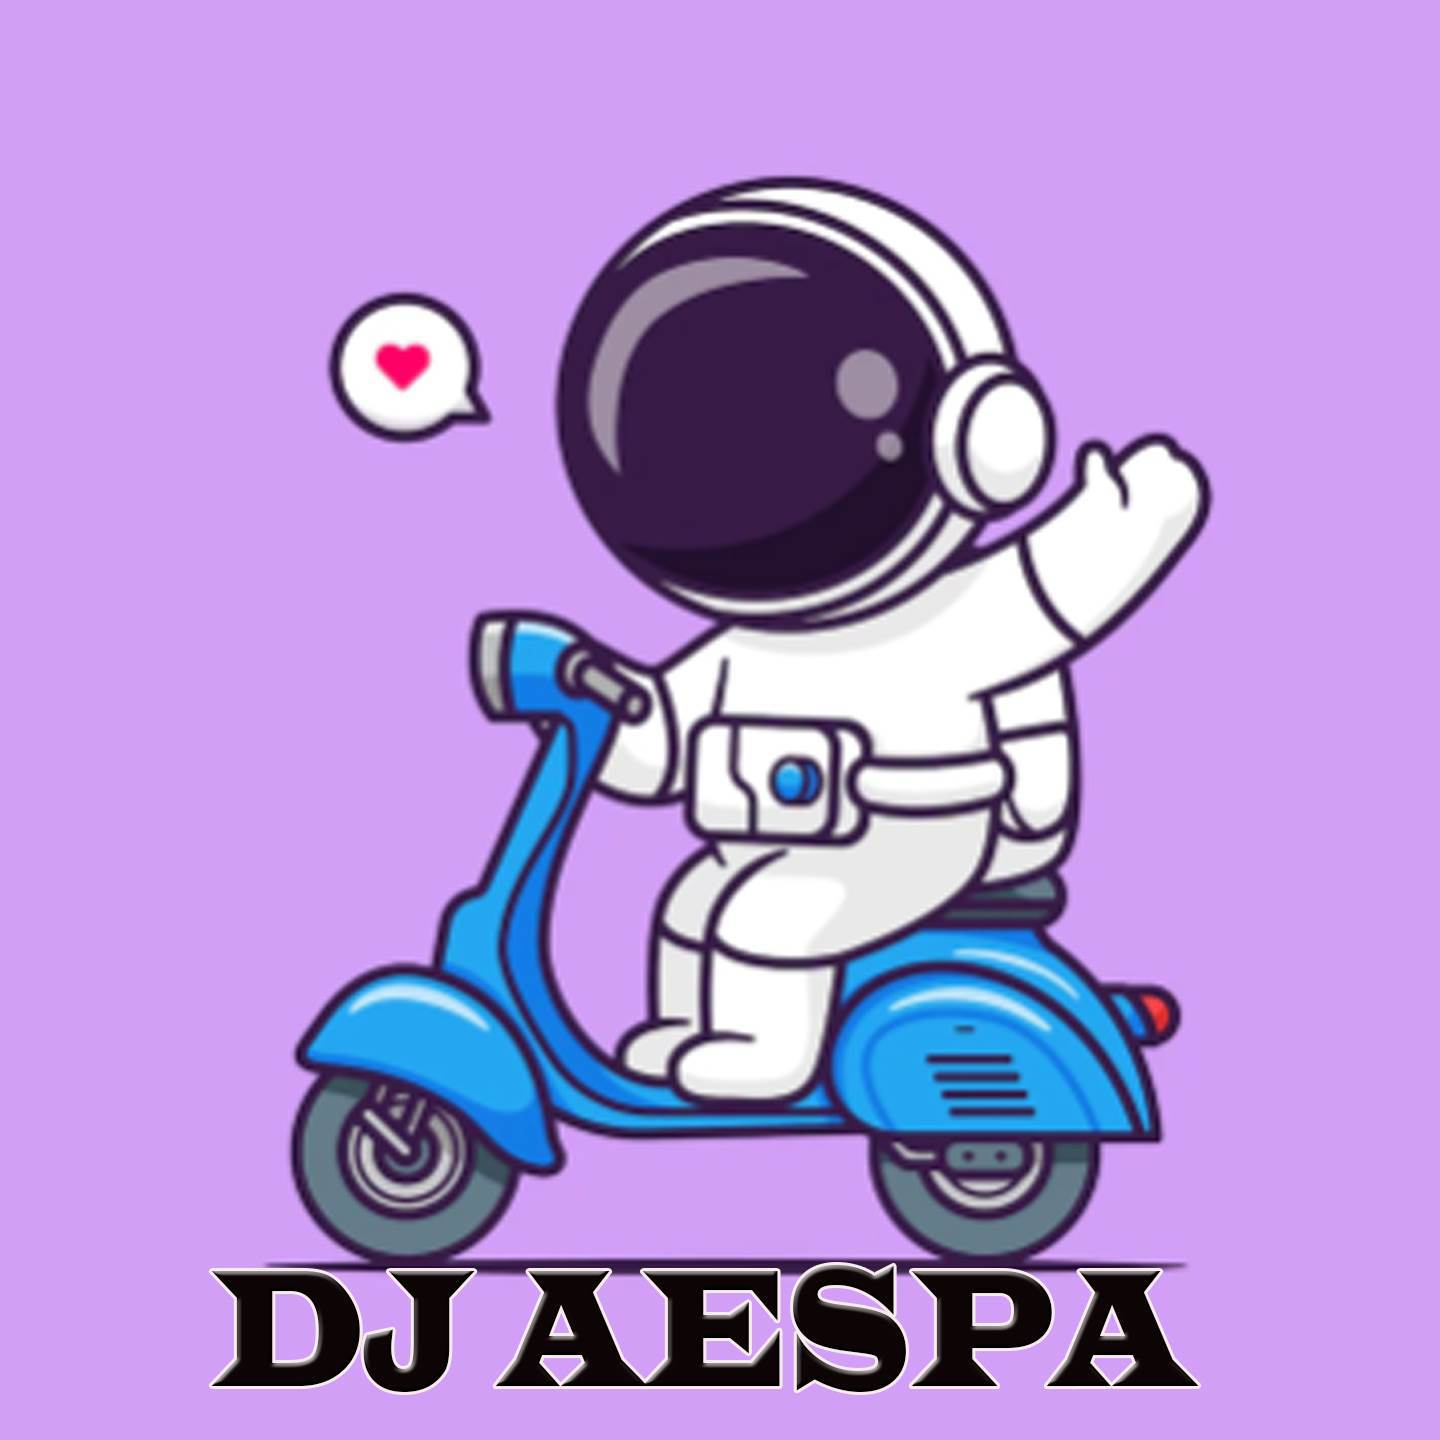 DJ AESPA - DJ sia cheap thrills_Remix mashup